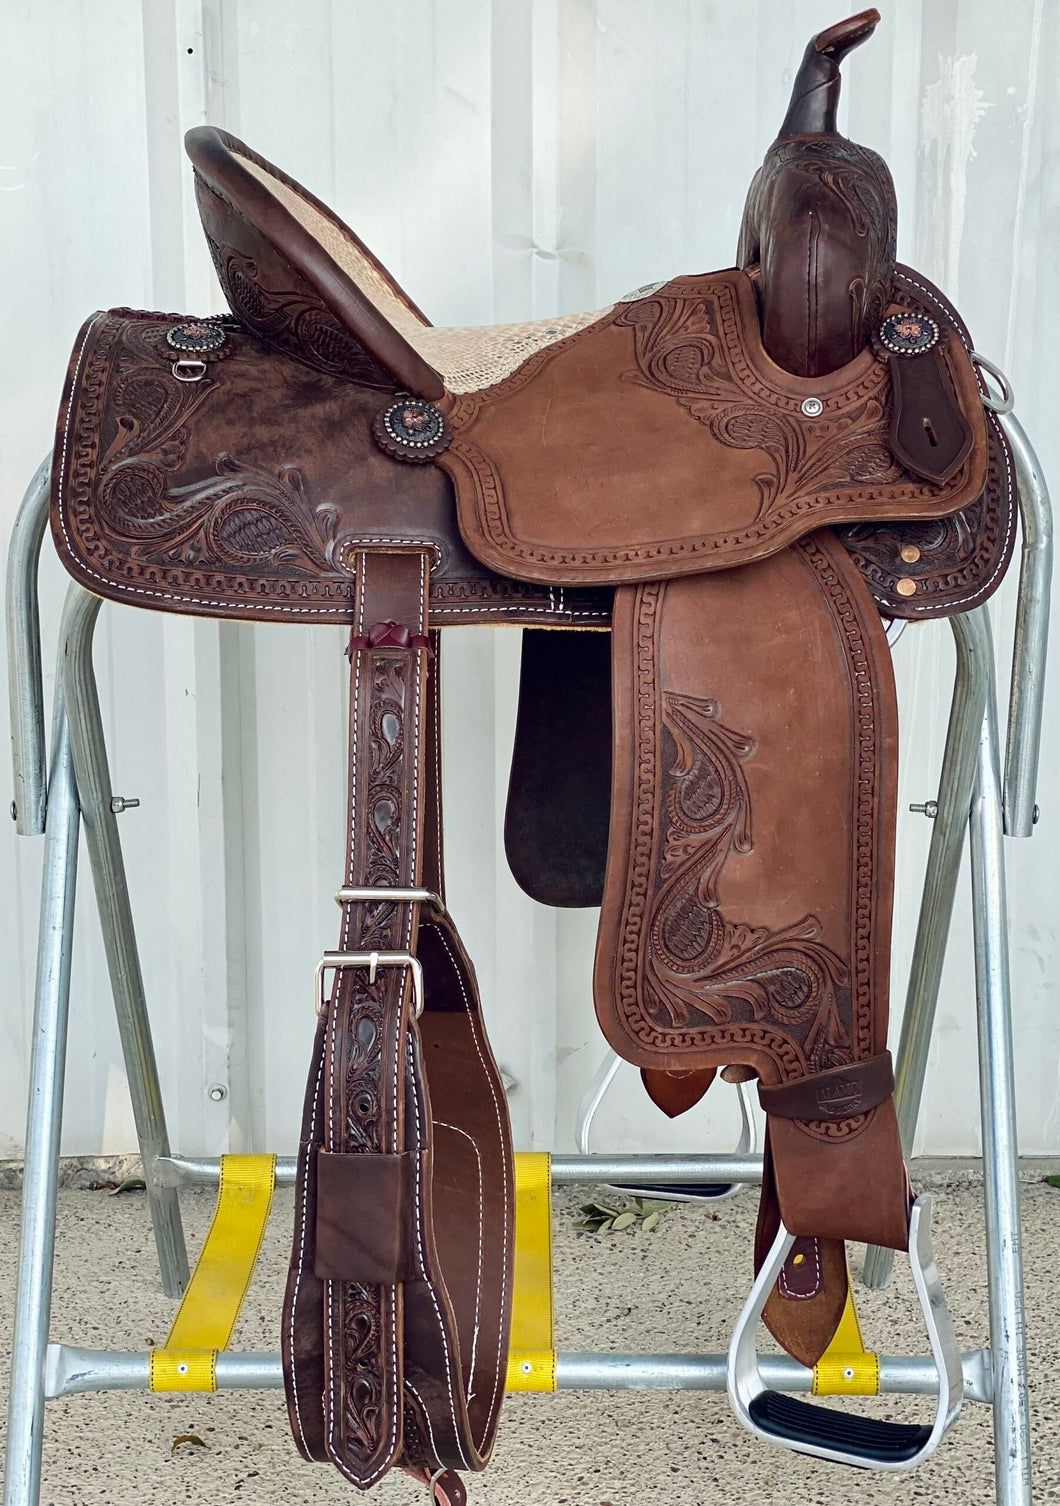 alamo saddlery medusa barrel saddle, side view on a metal saddle rack